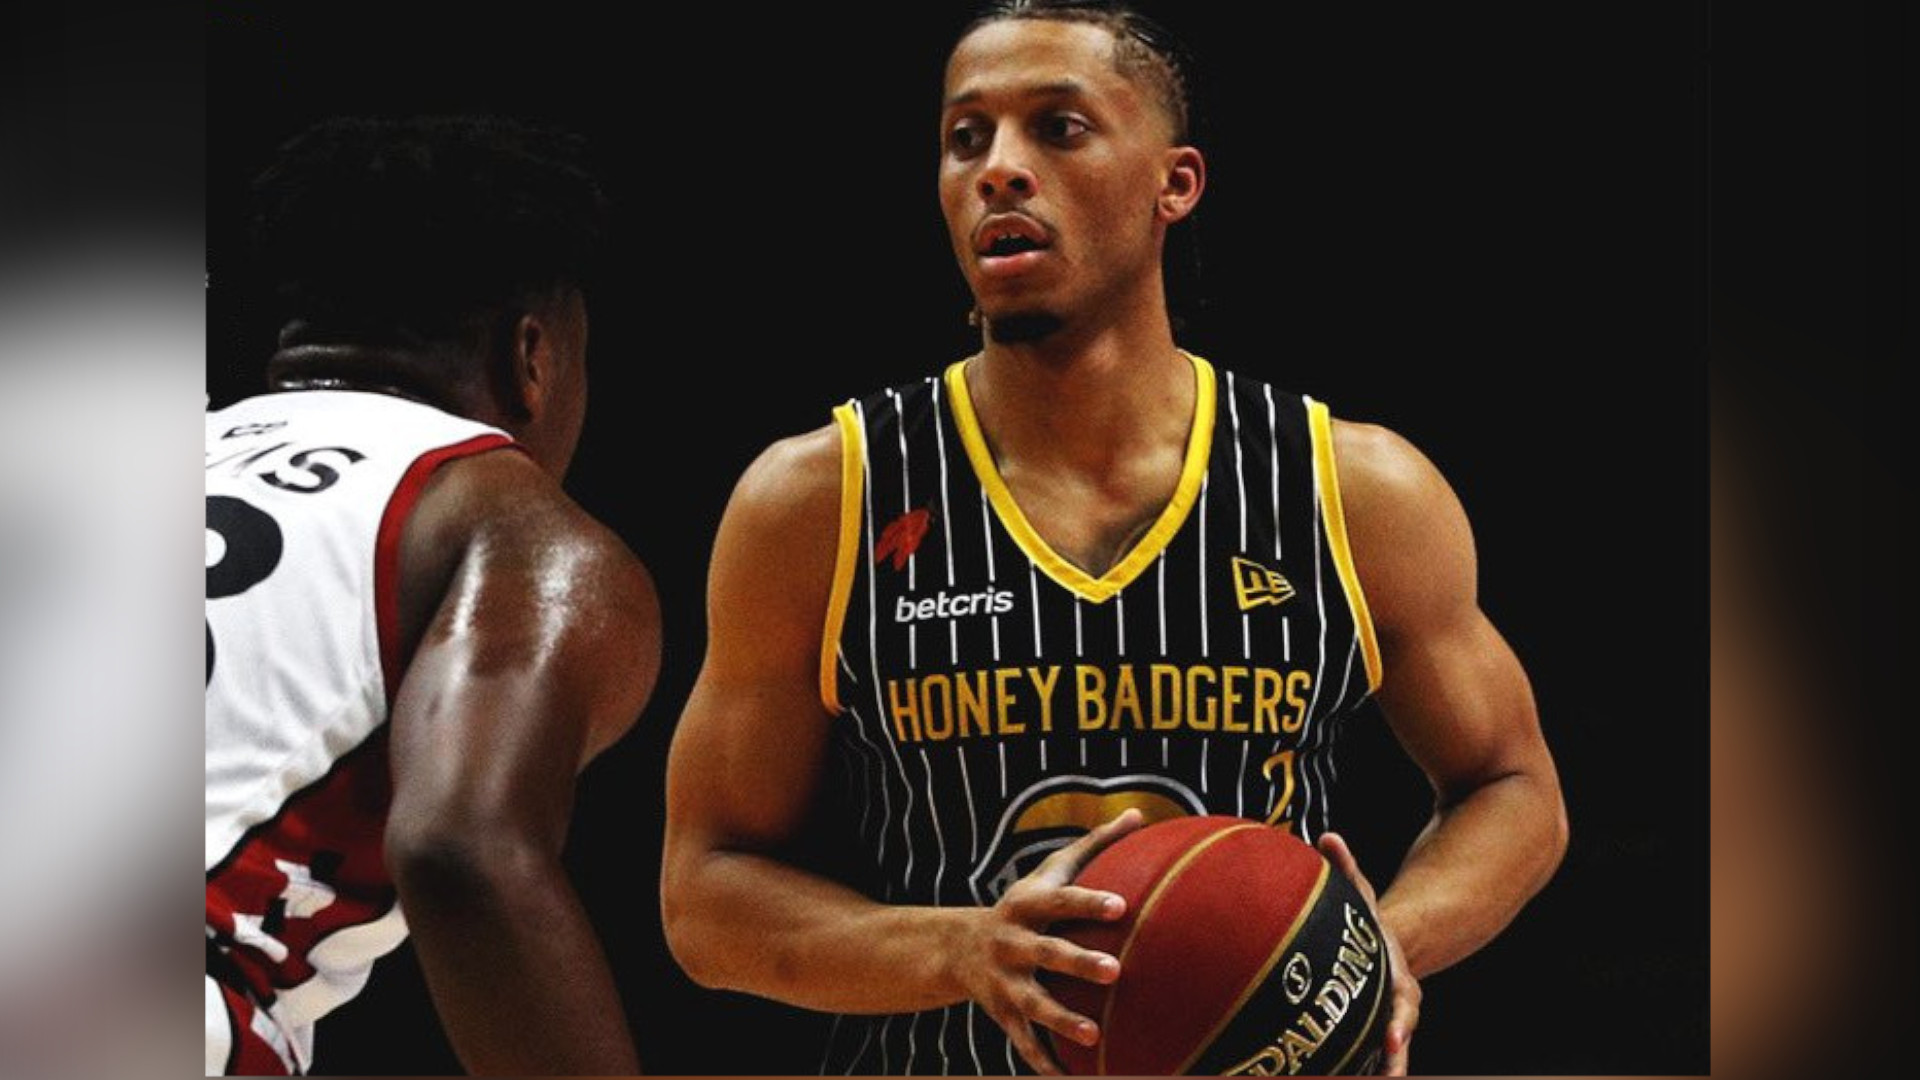 Behind The Name Hamilton Honey Badgers - Canadian Professional Basketball  Team